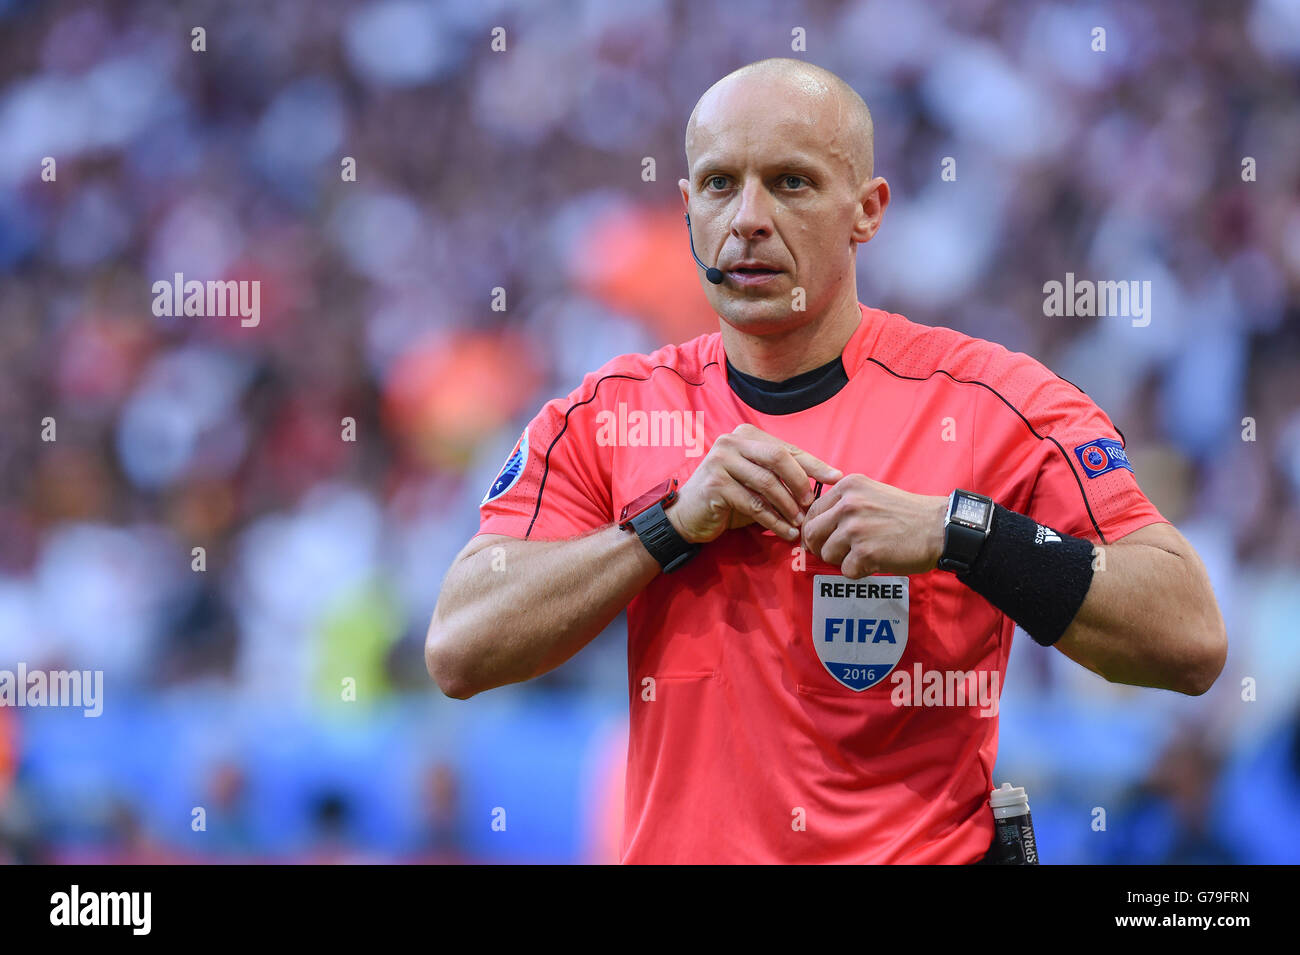 Szymon Marciniak (Referee ; June 26, 2016 - Football : Uefa Euro France 2016, Round of 16, Germany 3-0 Slovakia at Stade Pierre Mauroy, Lille Metropole, France. © aicfoto/AFLO/Alamy Live News Stock Photo